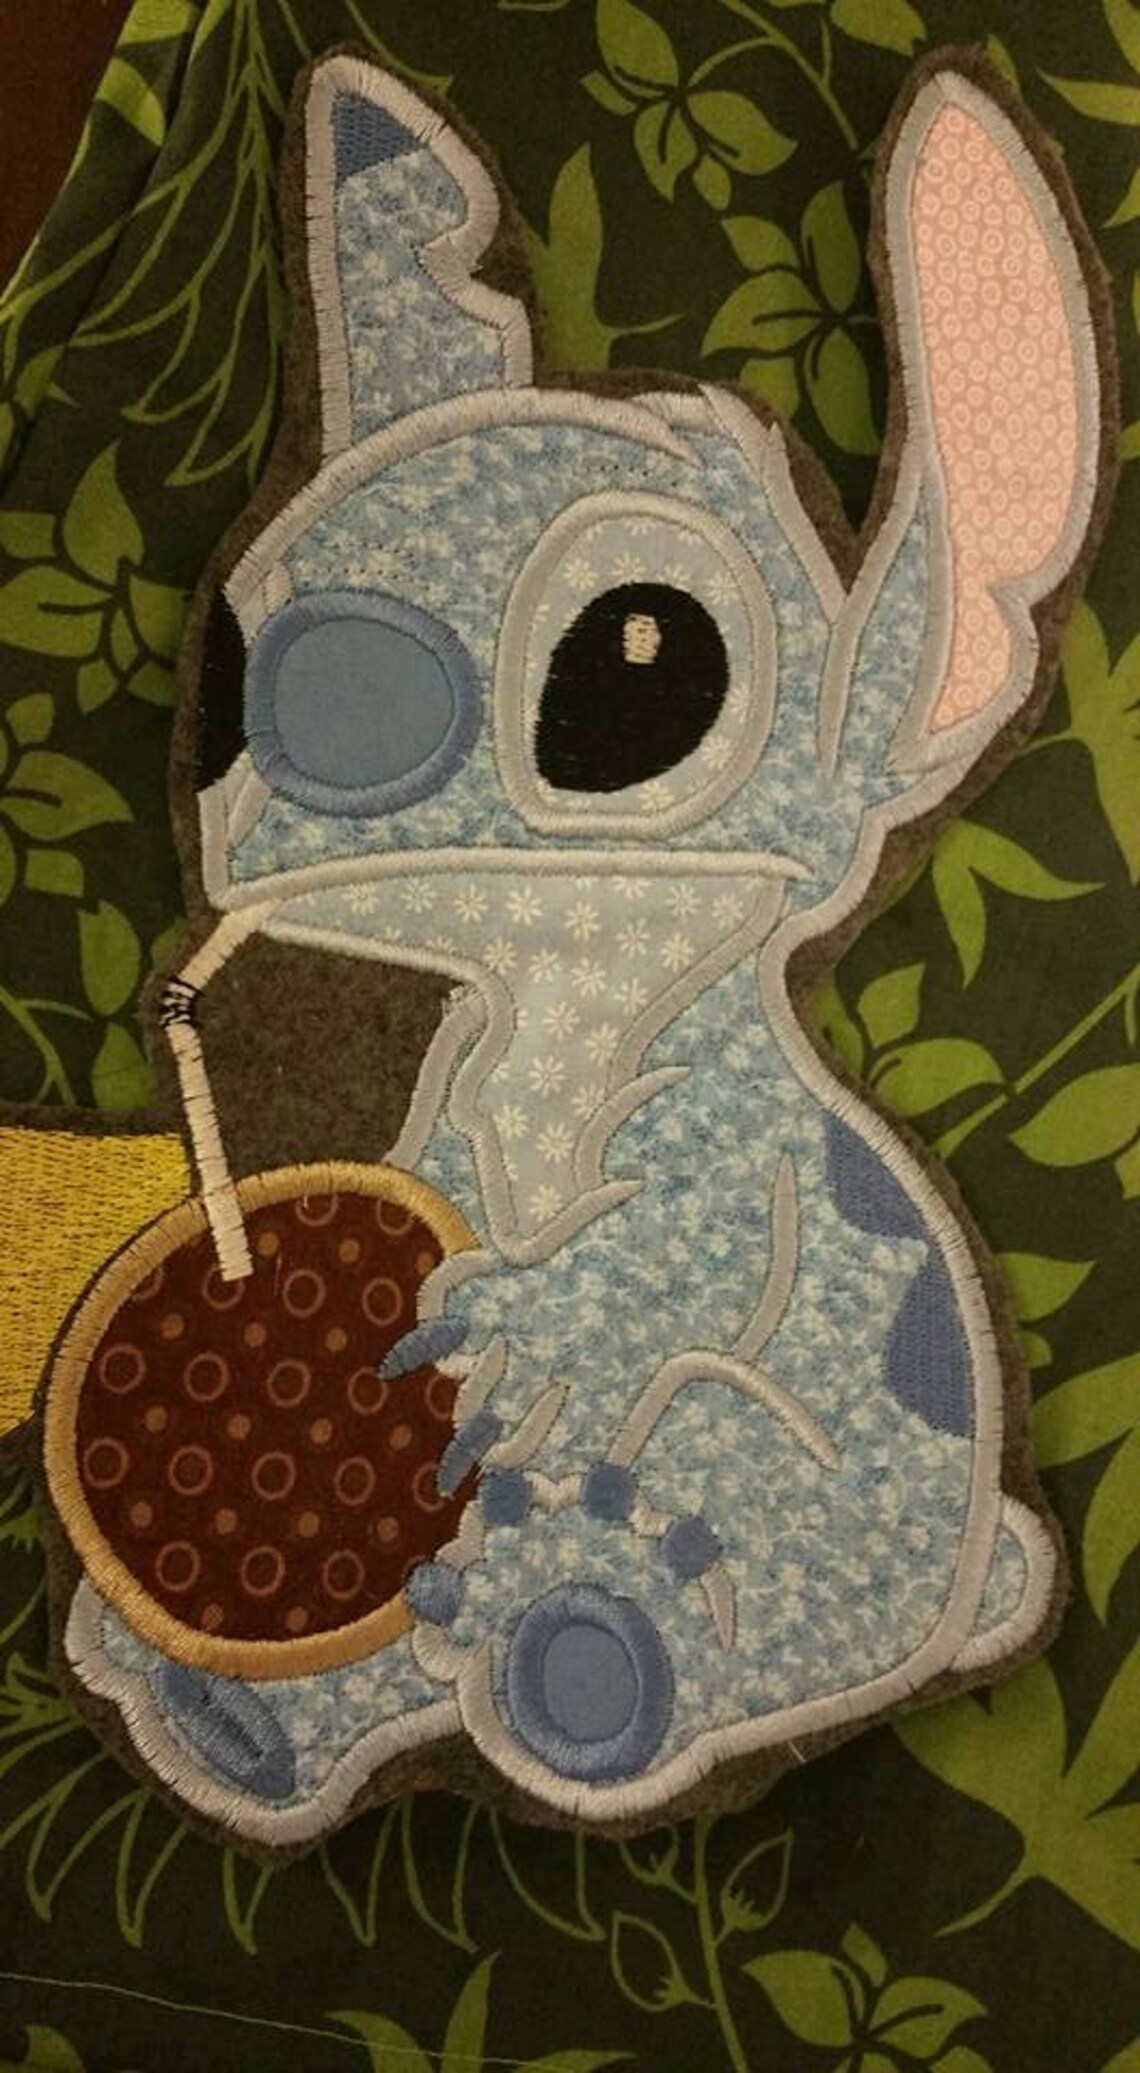 Stitch With a Coconut Lilo's Alien Embroidery Machine - Etsy